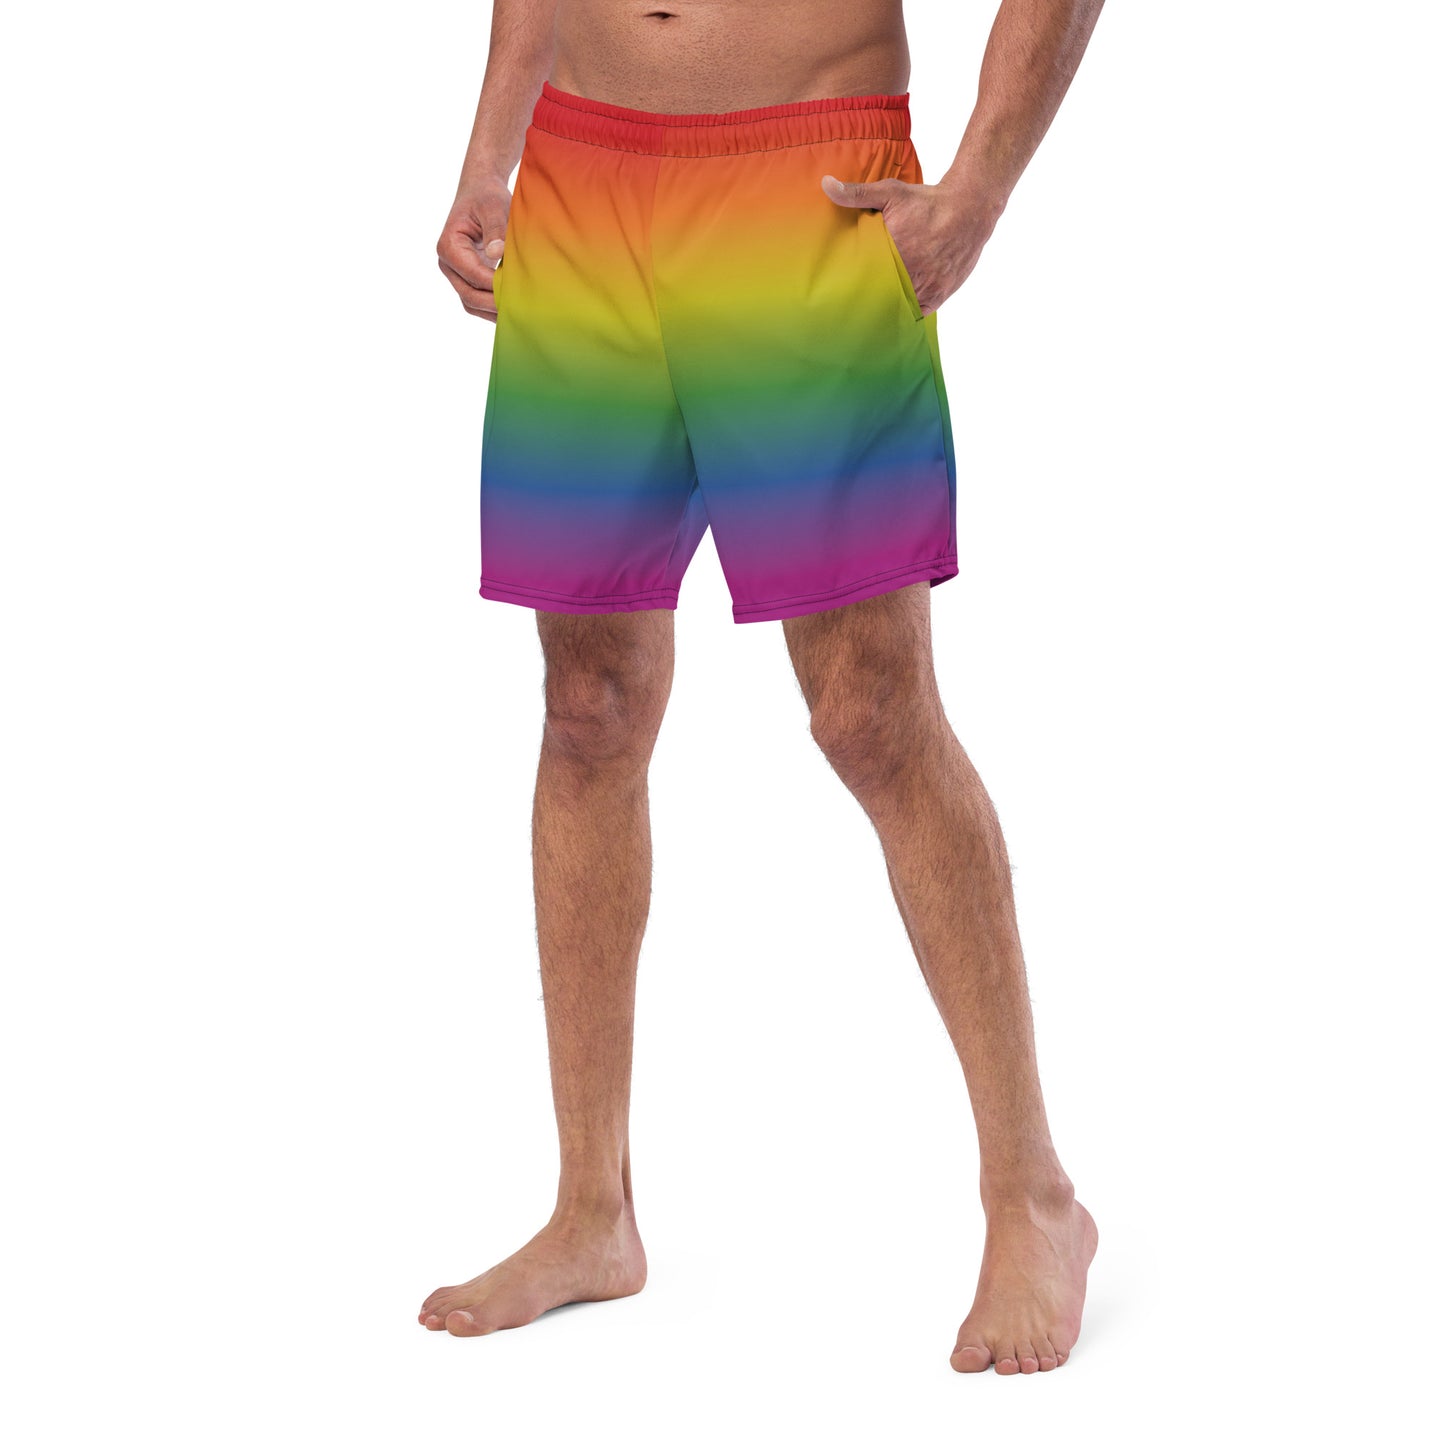 Rainbow men's swim trunks